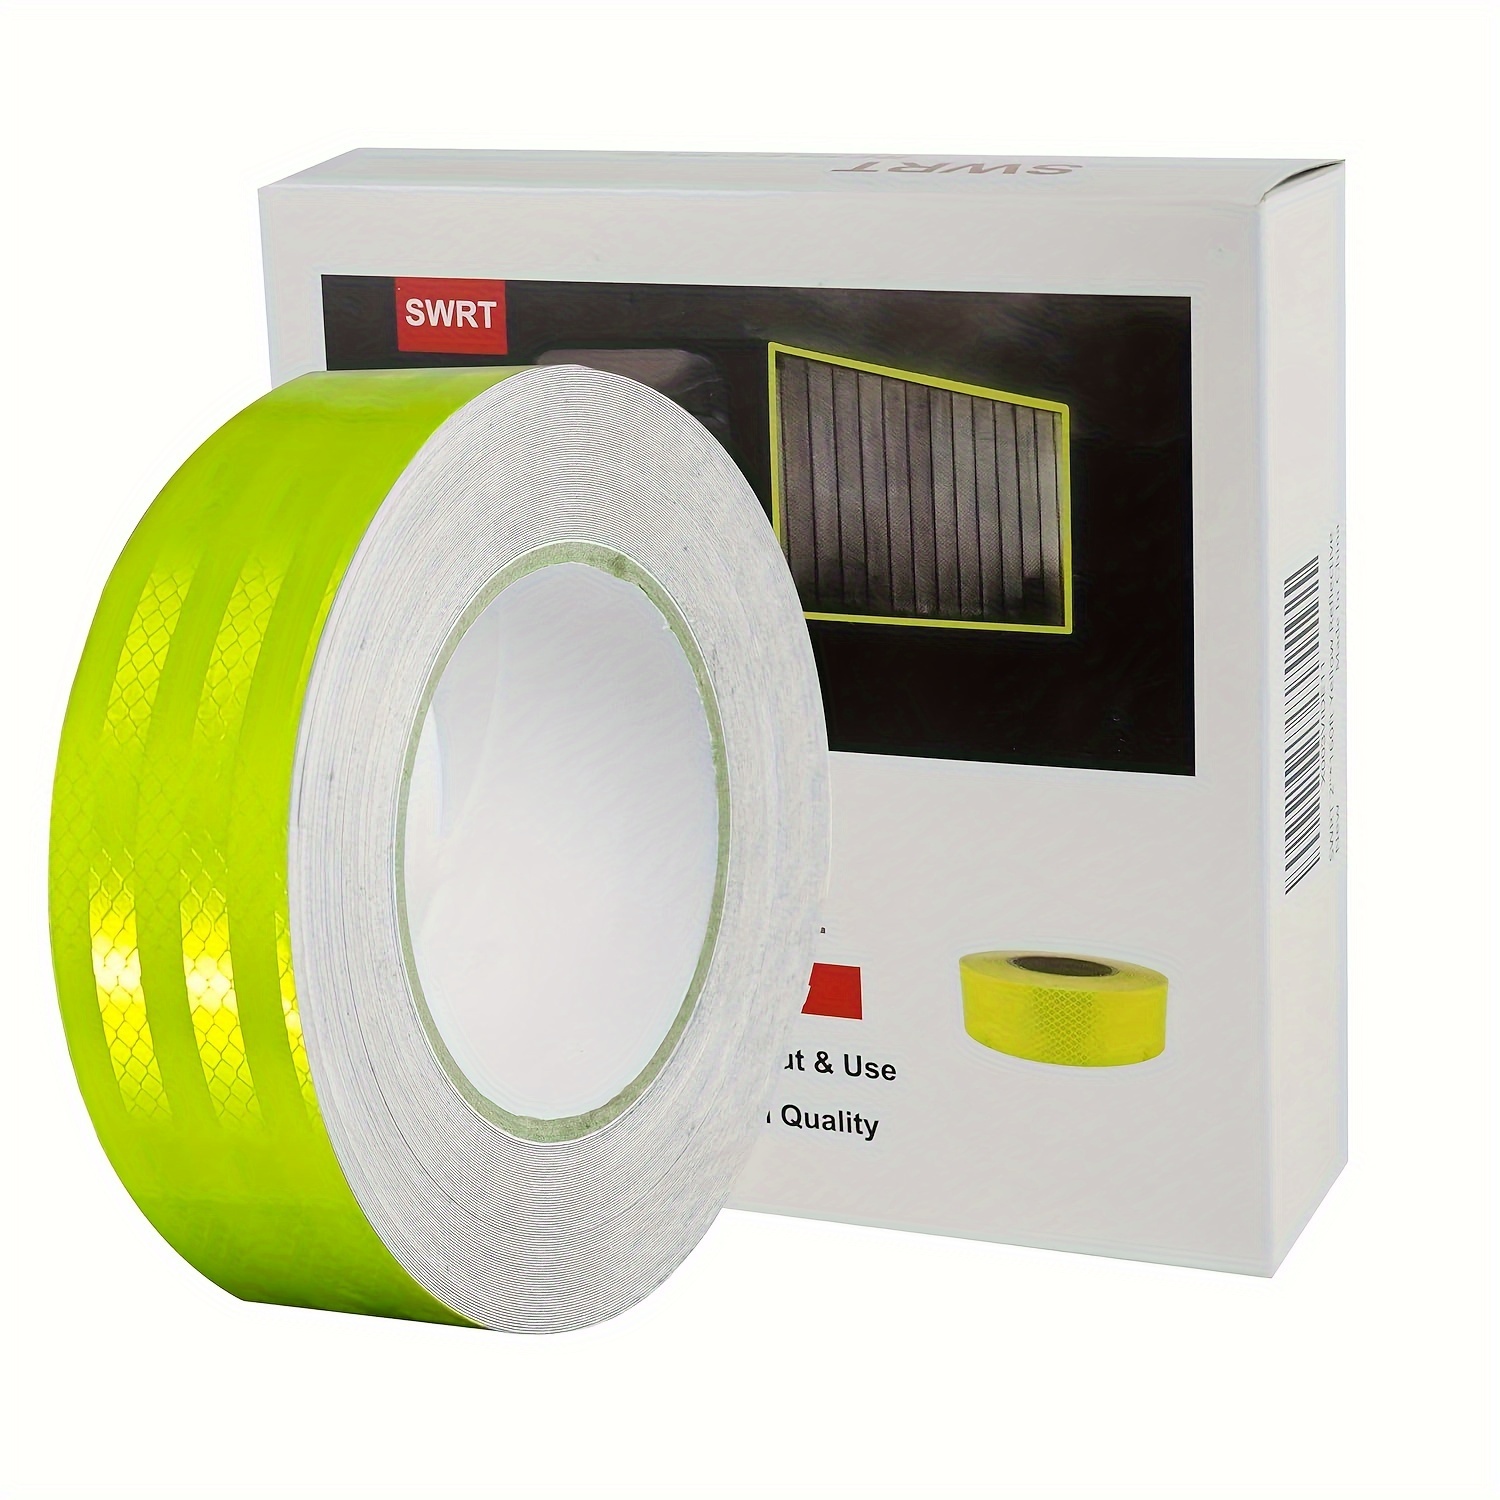 6PCS/SET UV Blacklight Reactive Fluorescent Cloth Tape Neon Gaffer Tape  Glow in The Dark